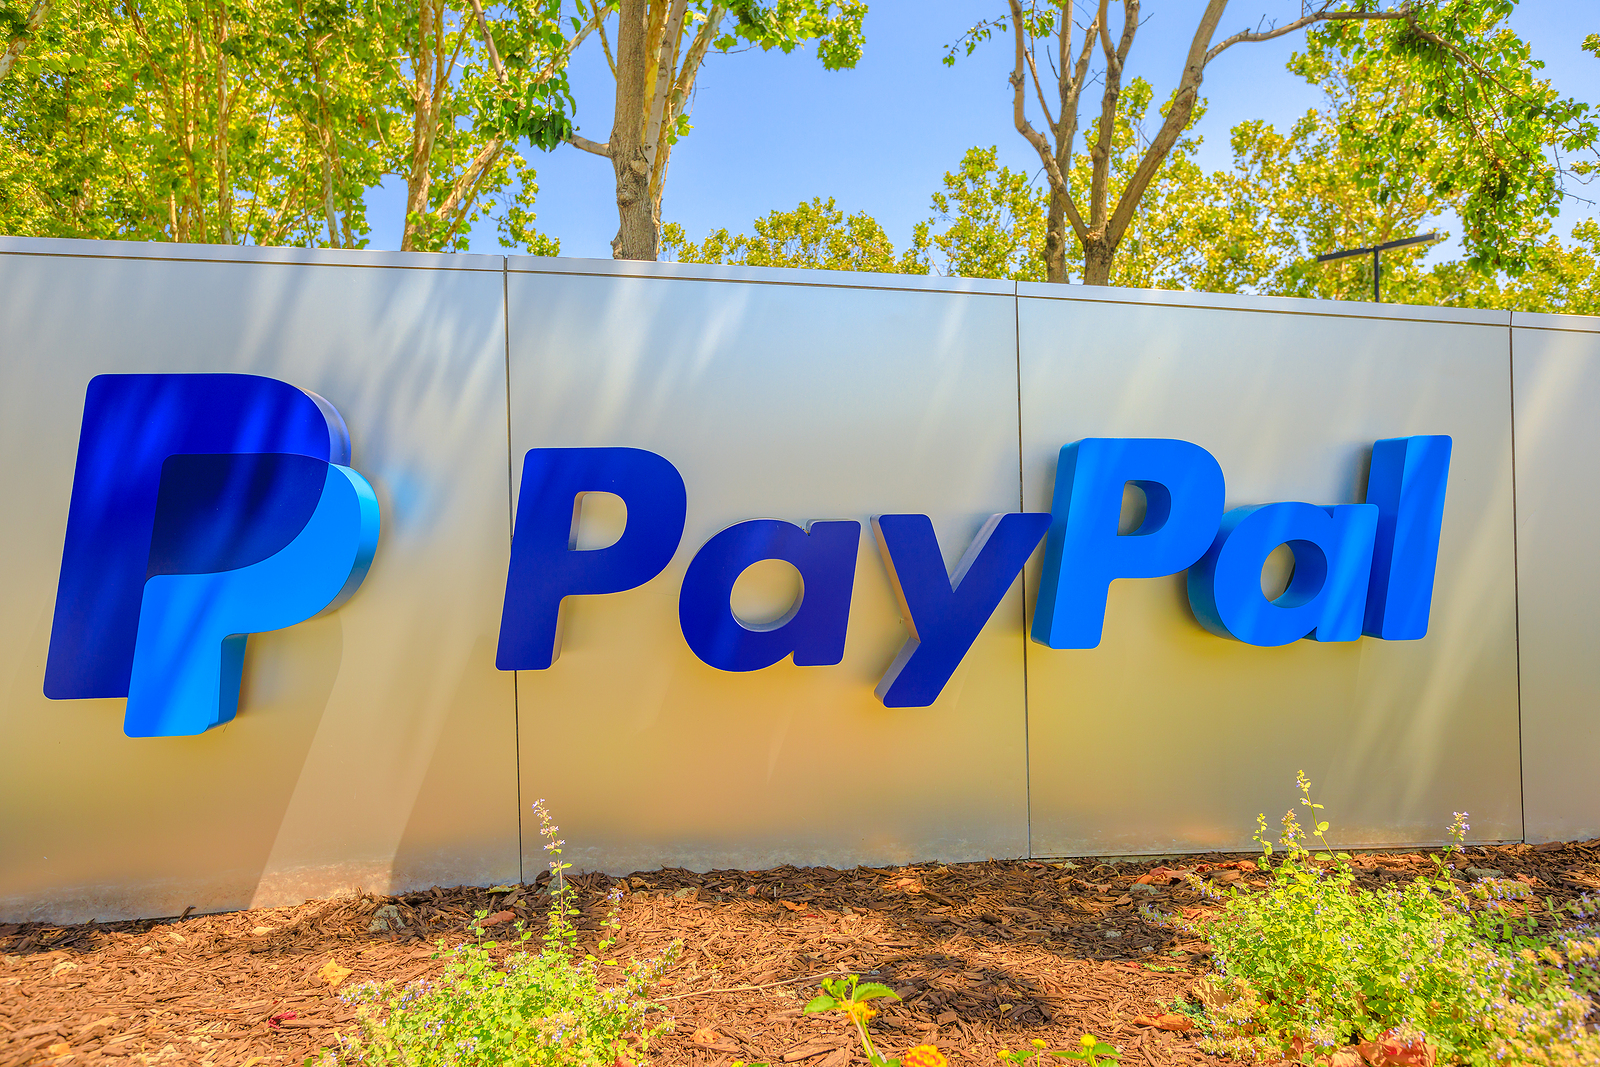 Paypal PYPL Stock news and analysis